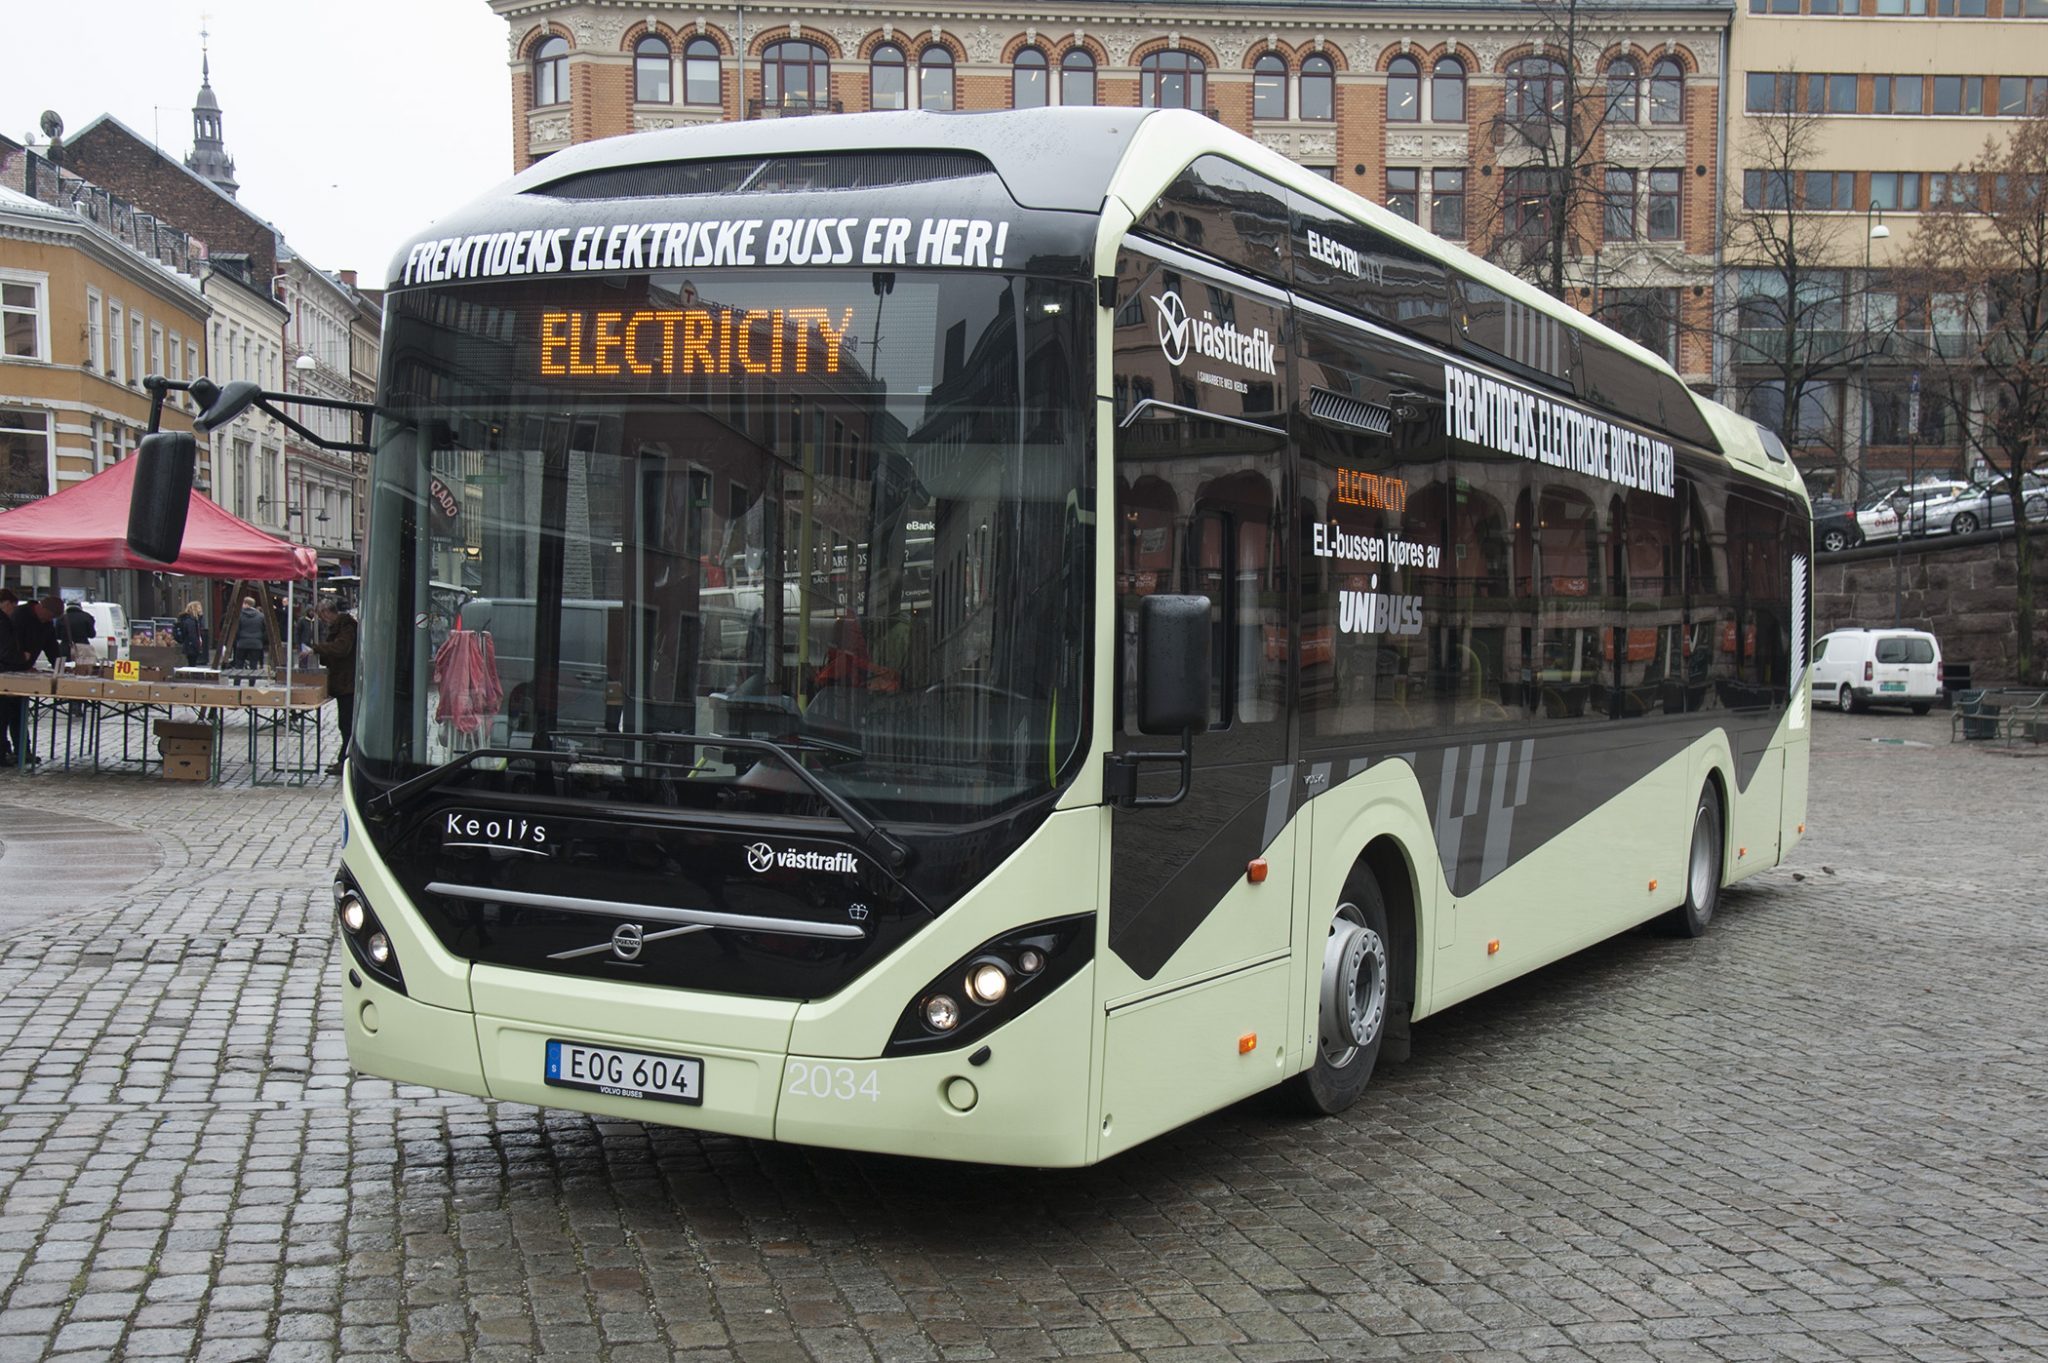 ZERO-jubel for nye elektriske busser i Oslo